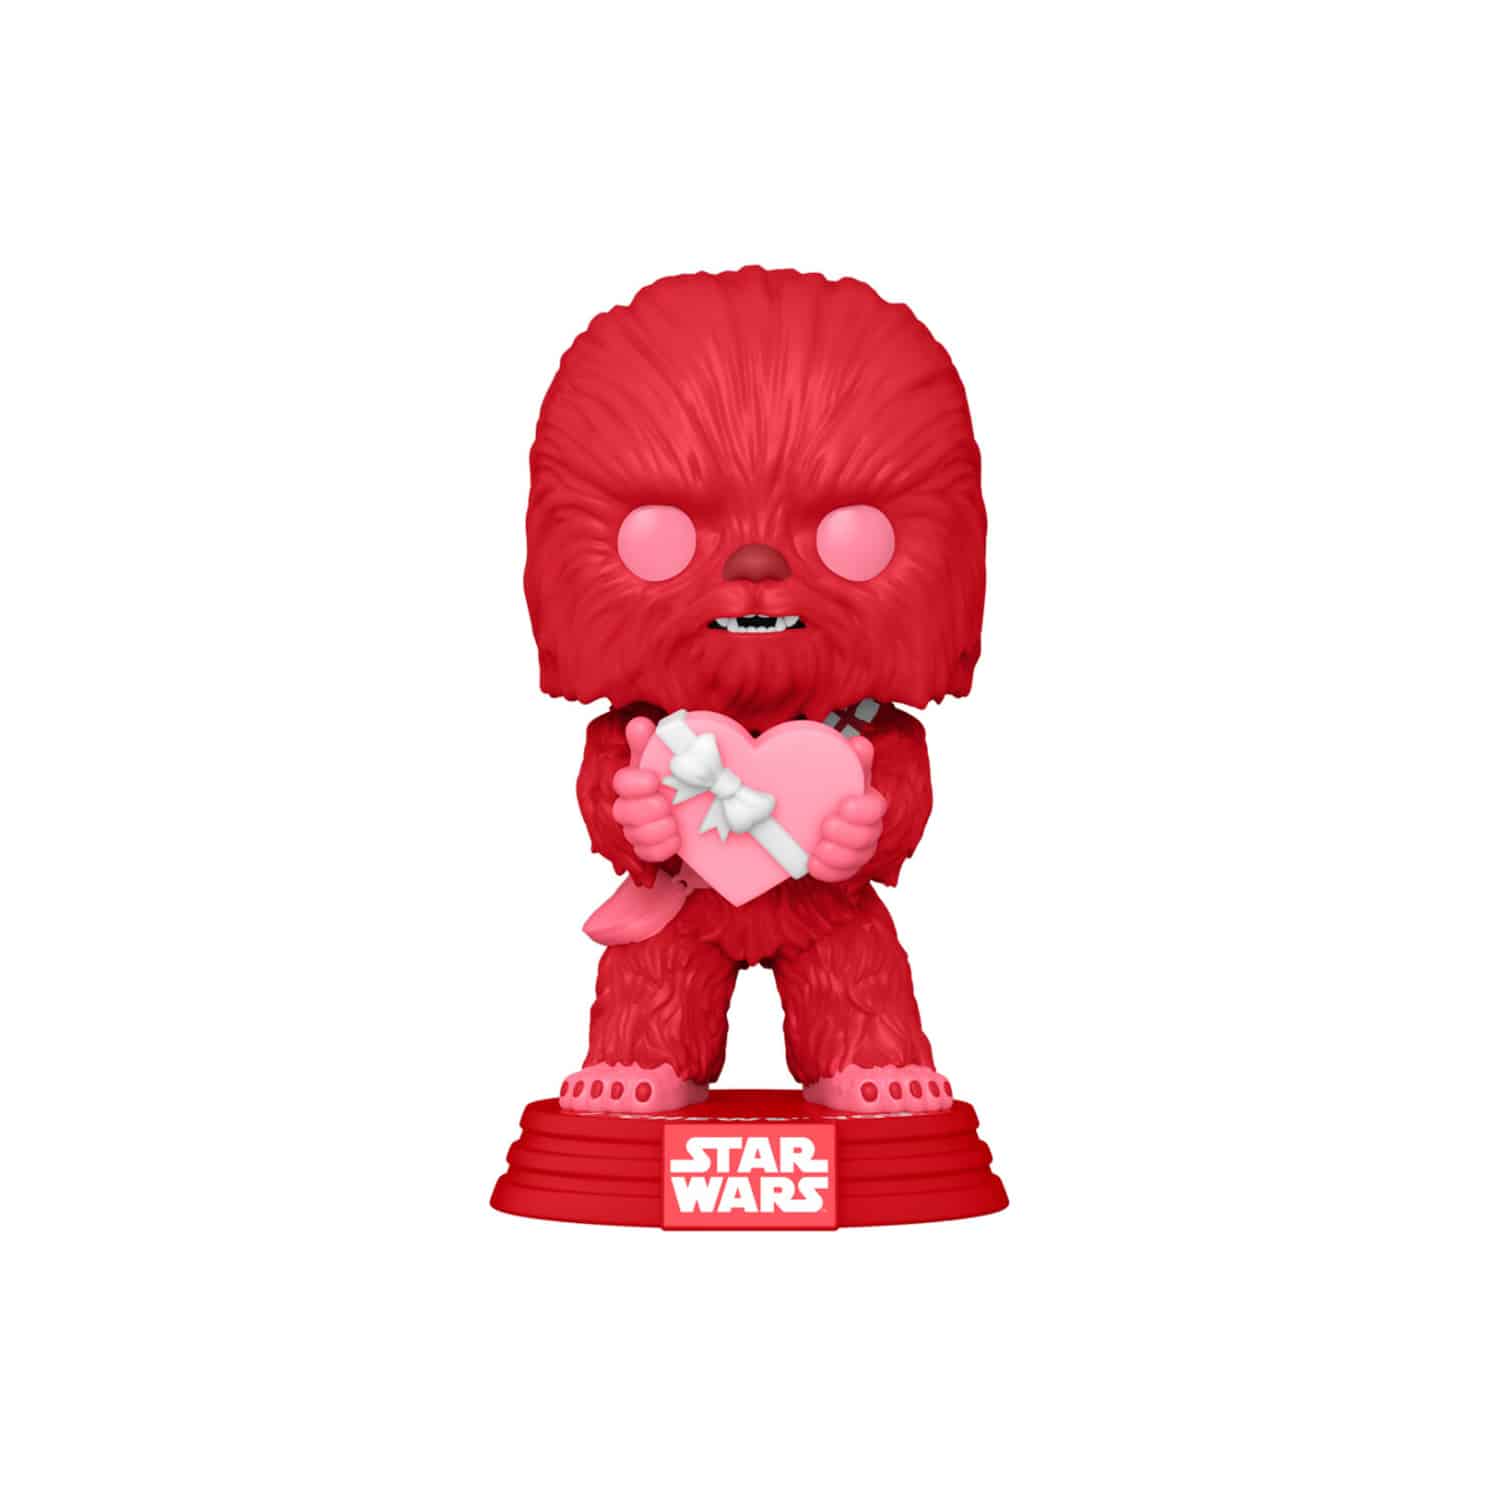 Star Wars - Valentine's Day Chewbacca Funko Pop!